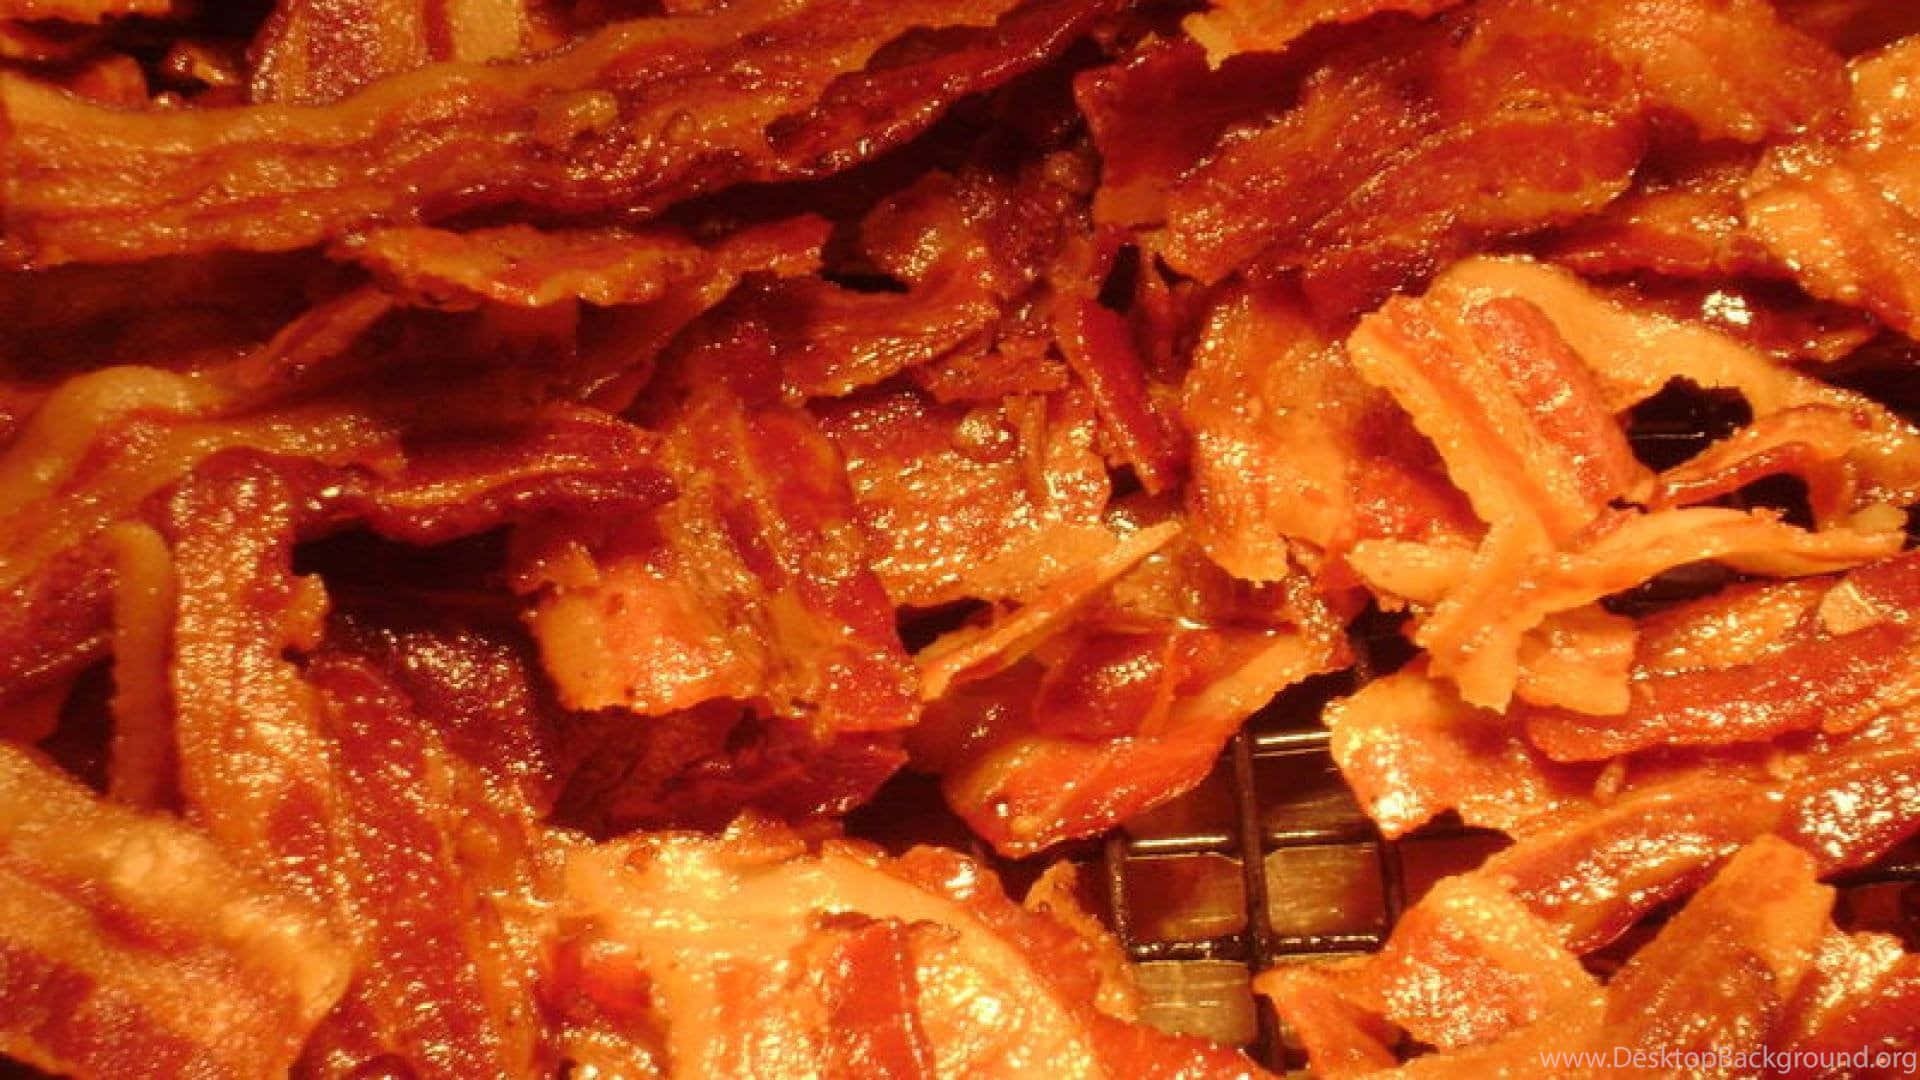 Bacon Bilder